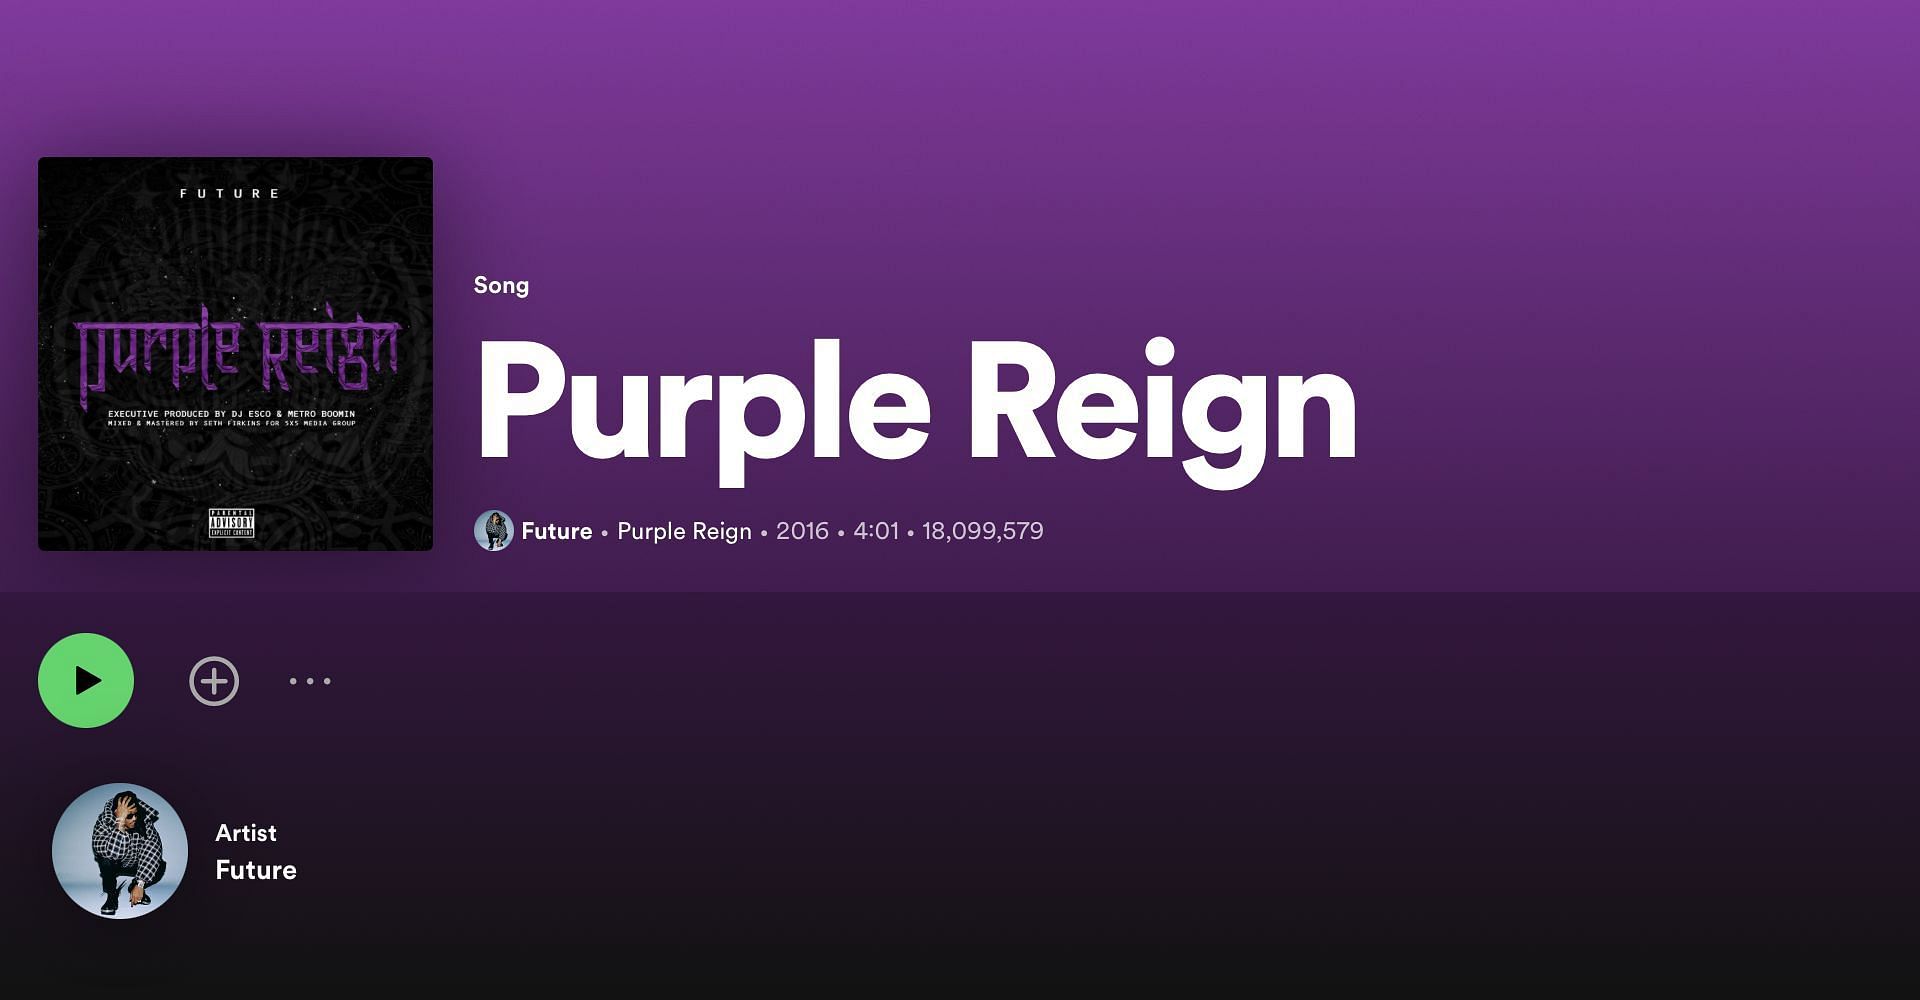 Track 11 on Pluto&#039;s 2016 album titled &#039;Purple Reign&#039; (Image via Spotify)